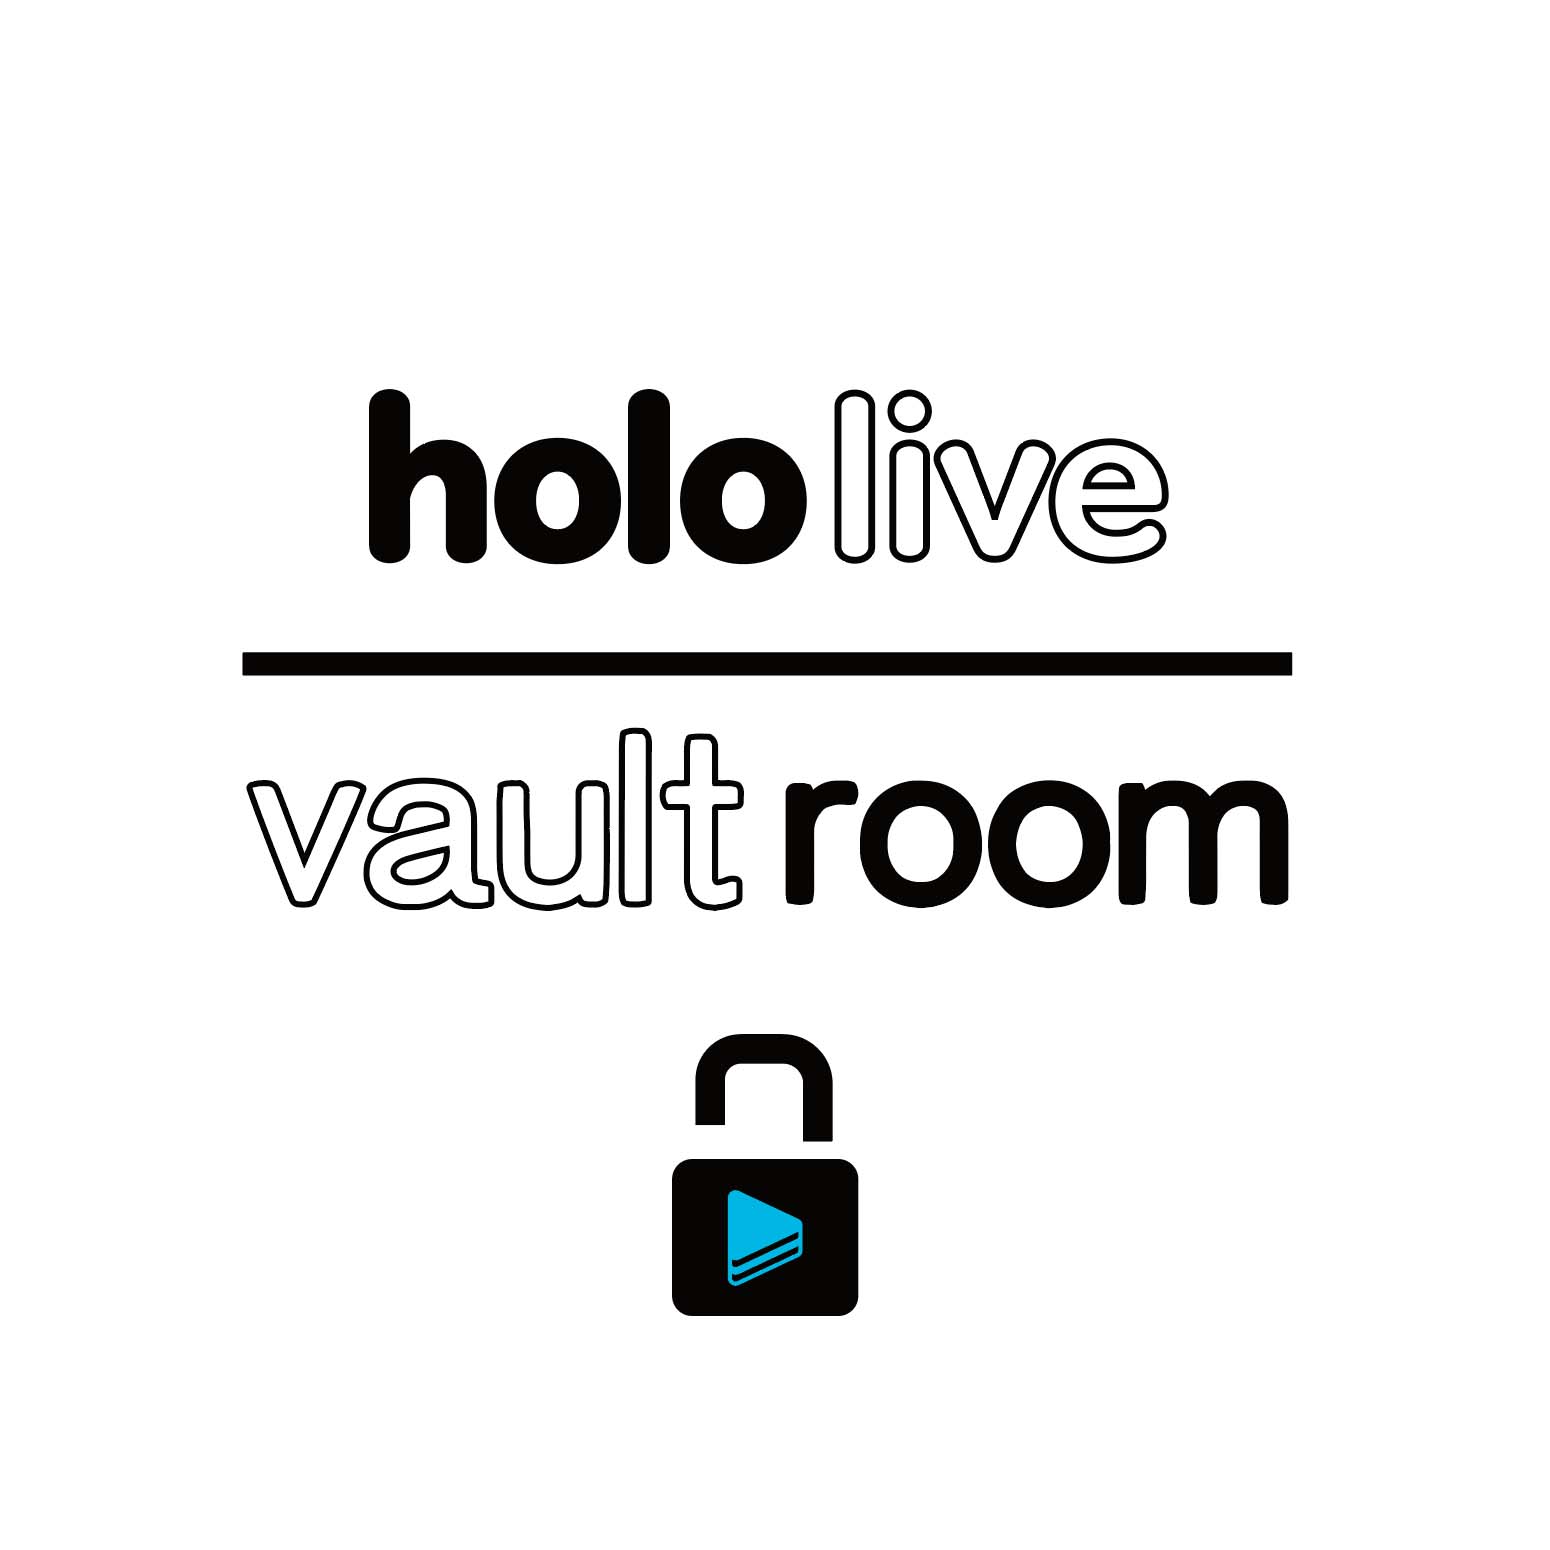 vaultroom × hololive – VAULTROOM